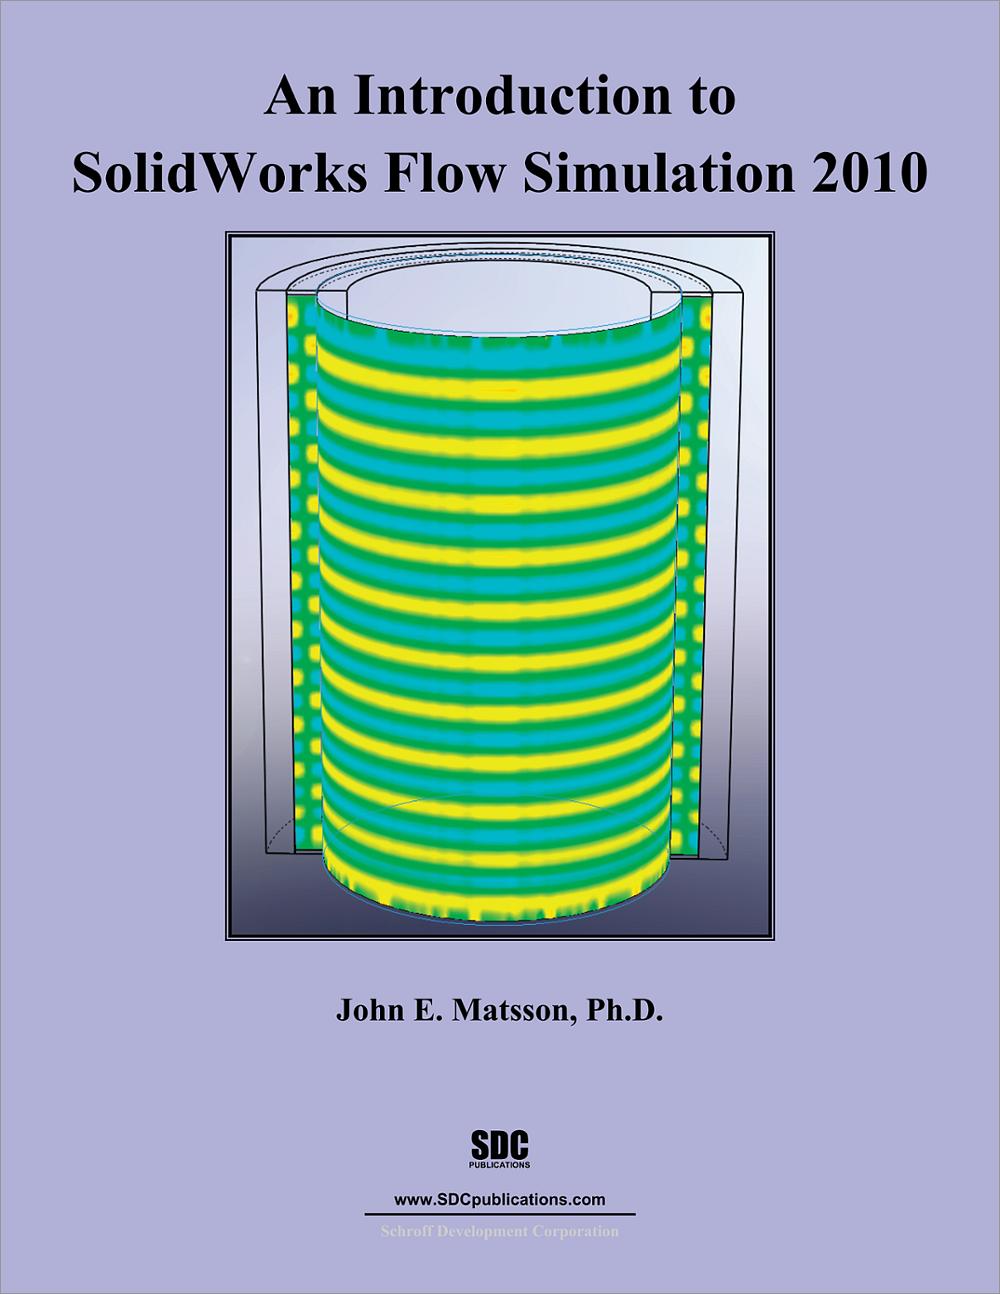 solidworks flow simulation key